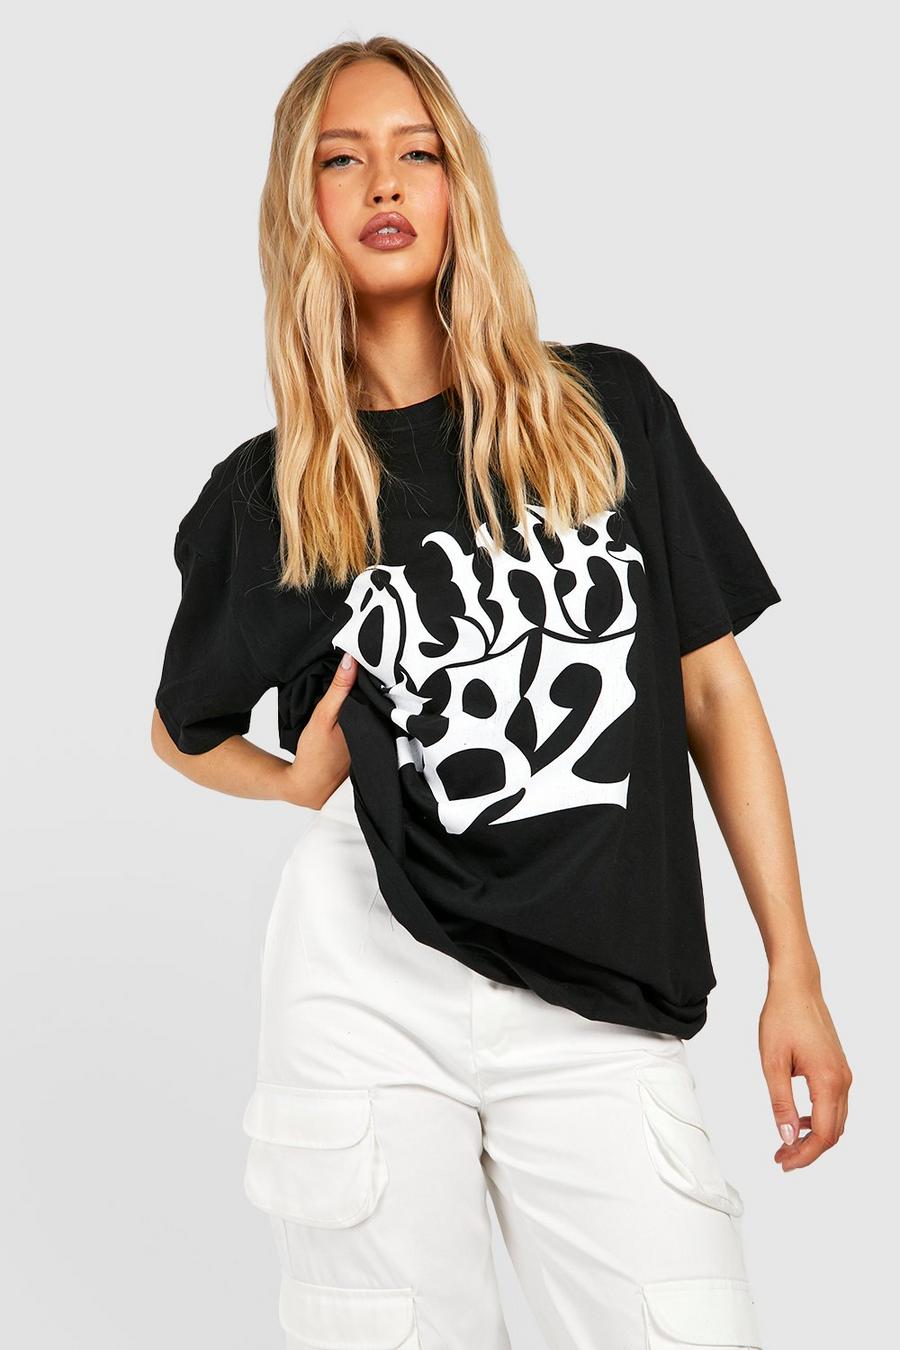 Women's Band T Shirts | Music & Rock Band Tees | boohoo UK